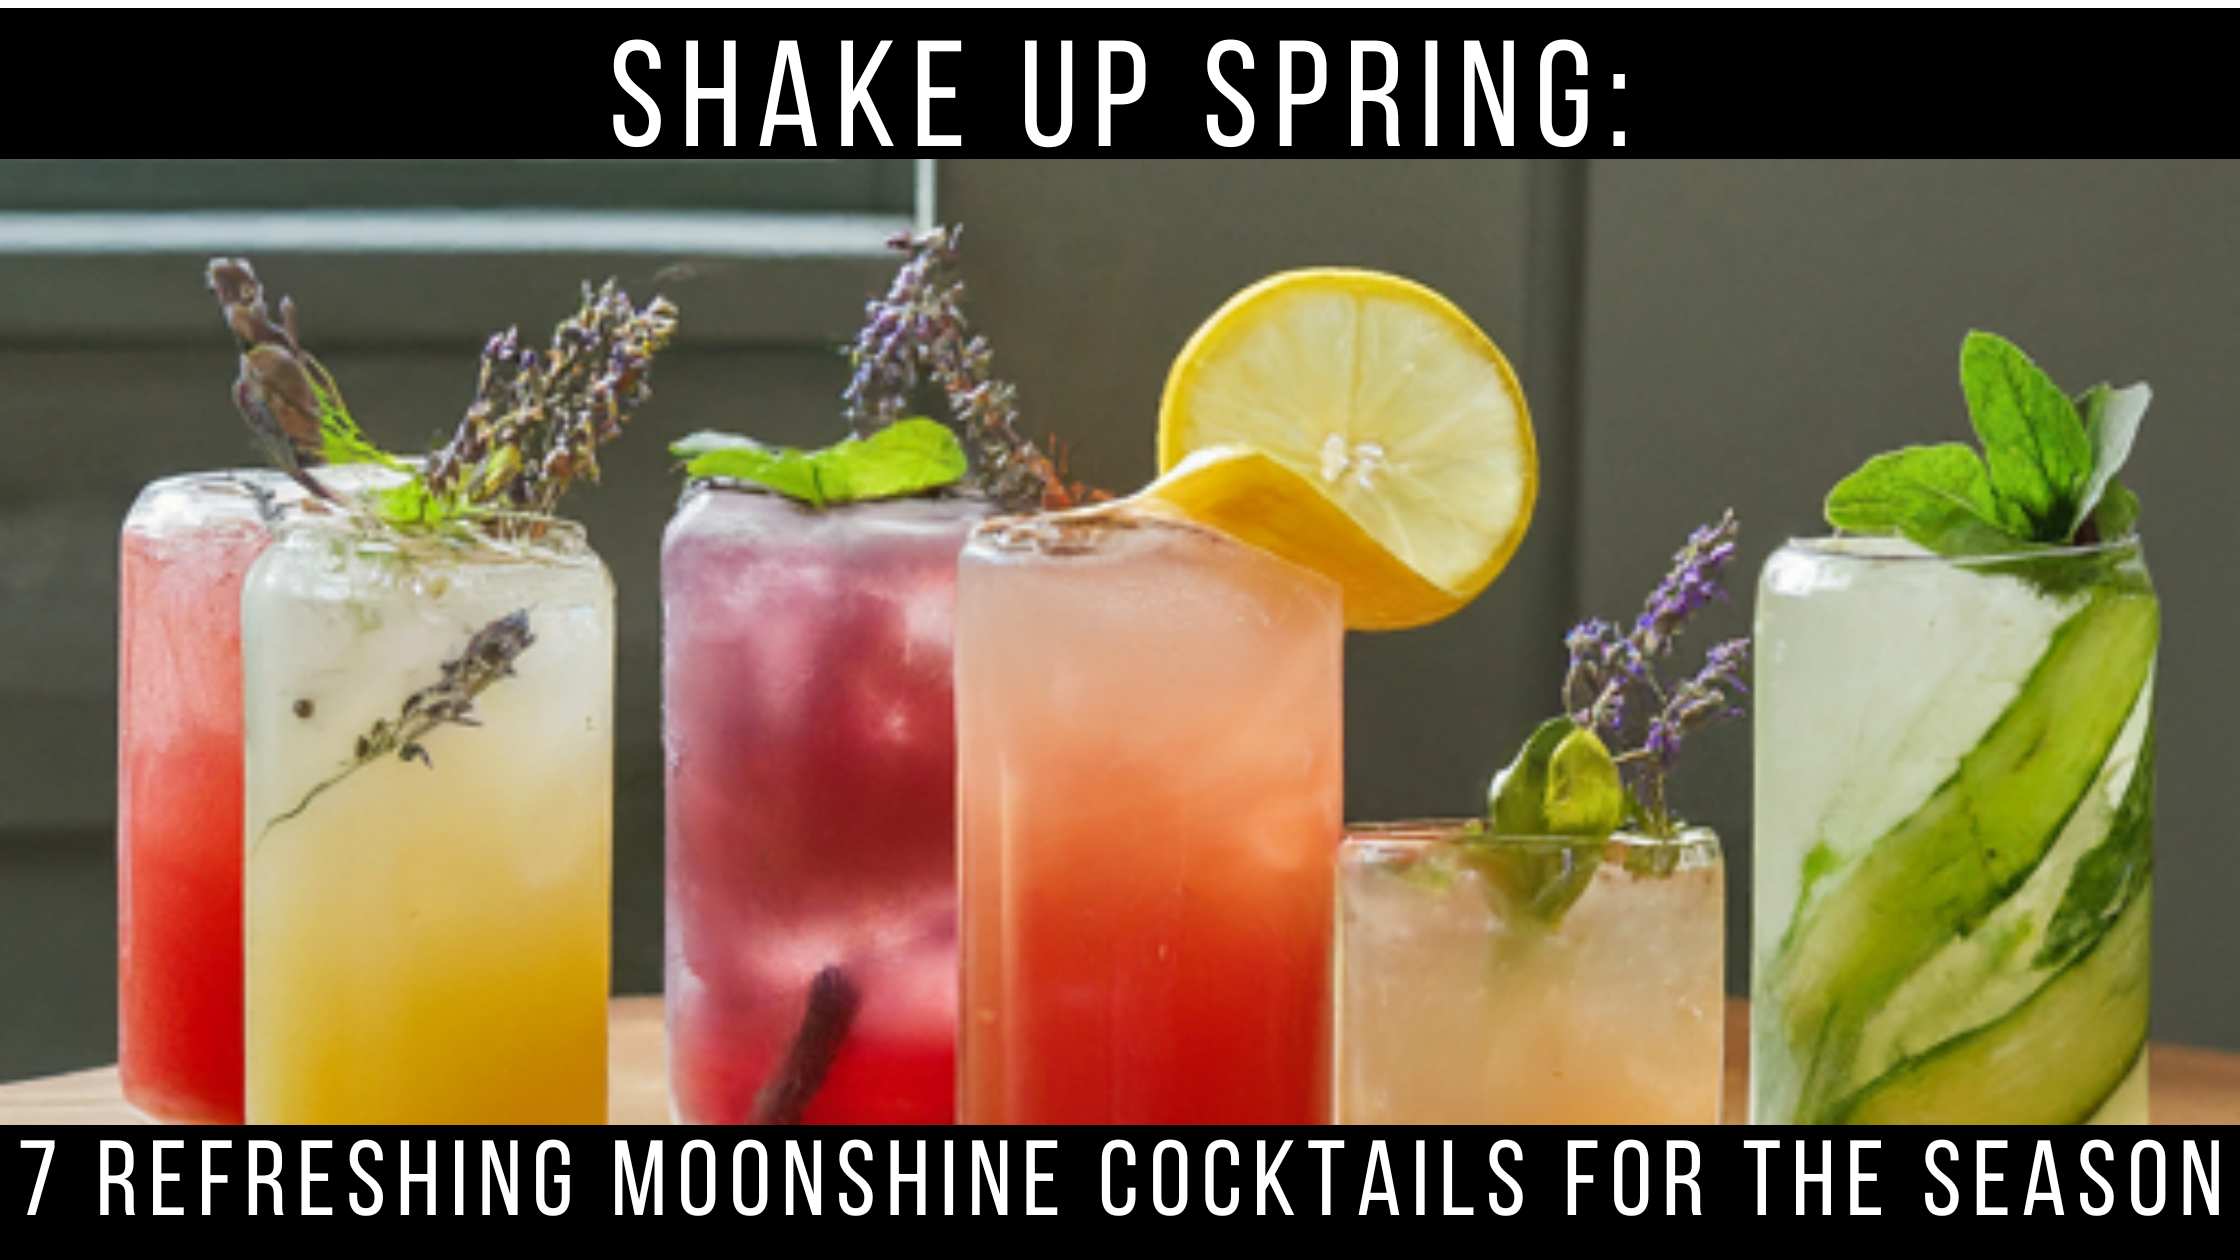 Shake Up Spring: 7 Refreshing Moonshine Cocktails for the Season